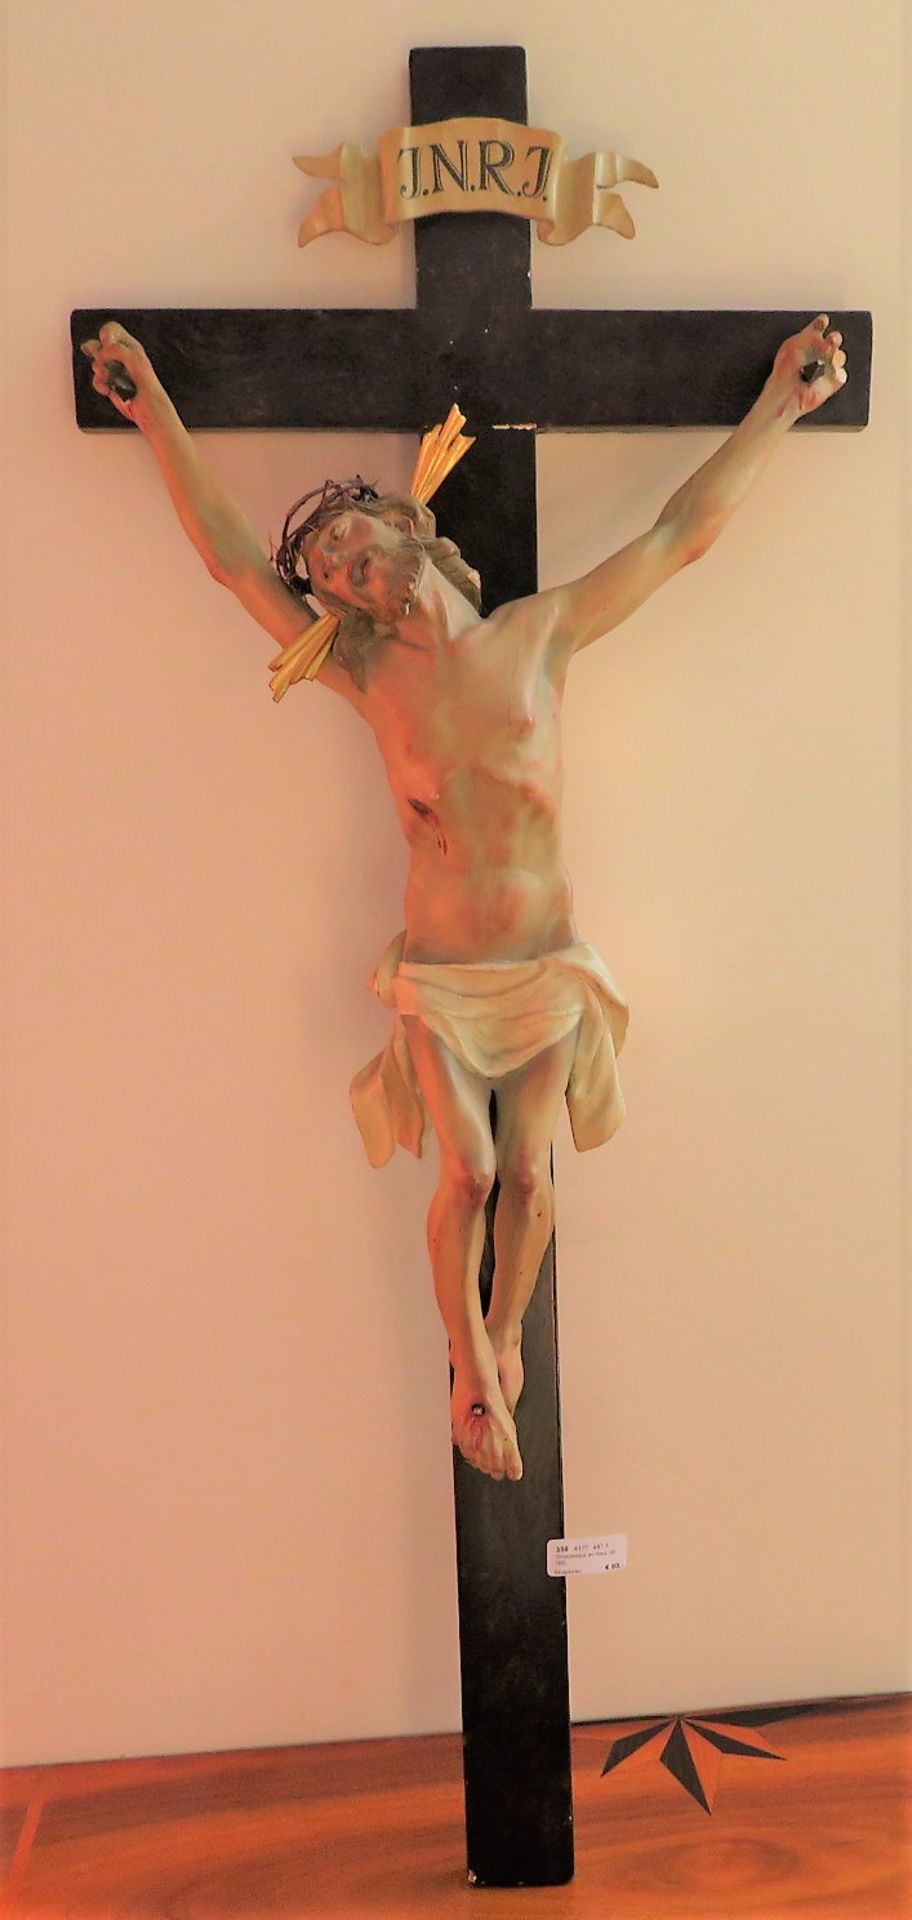 Christuskorpus am Kreuz, um 1800, 2-Nagel-Typus, Lindenholz beschnitzt, gefasst